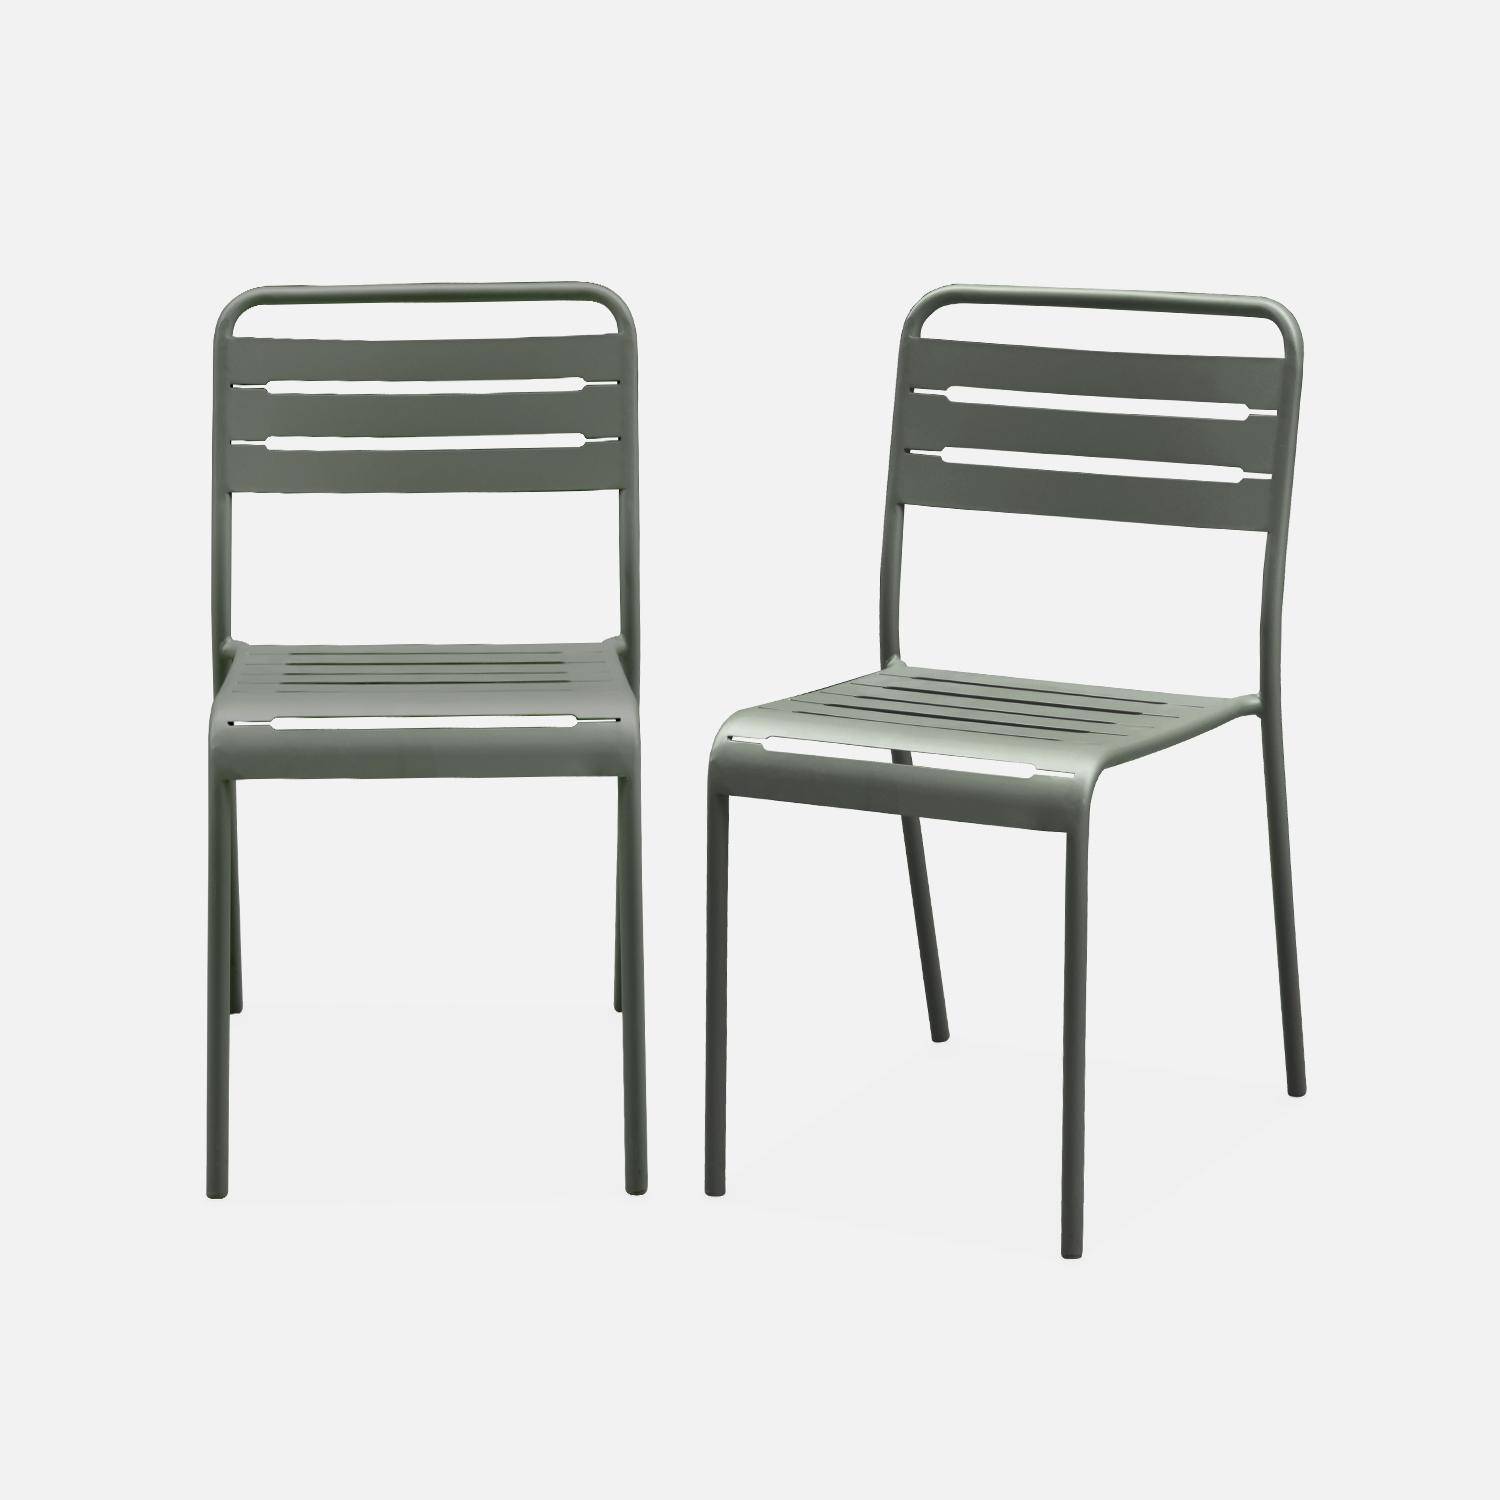 Pair of bistro steel garden chairs, stackable, W44xD52xH79cm, Khaki Green,sweeek,Photo4